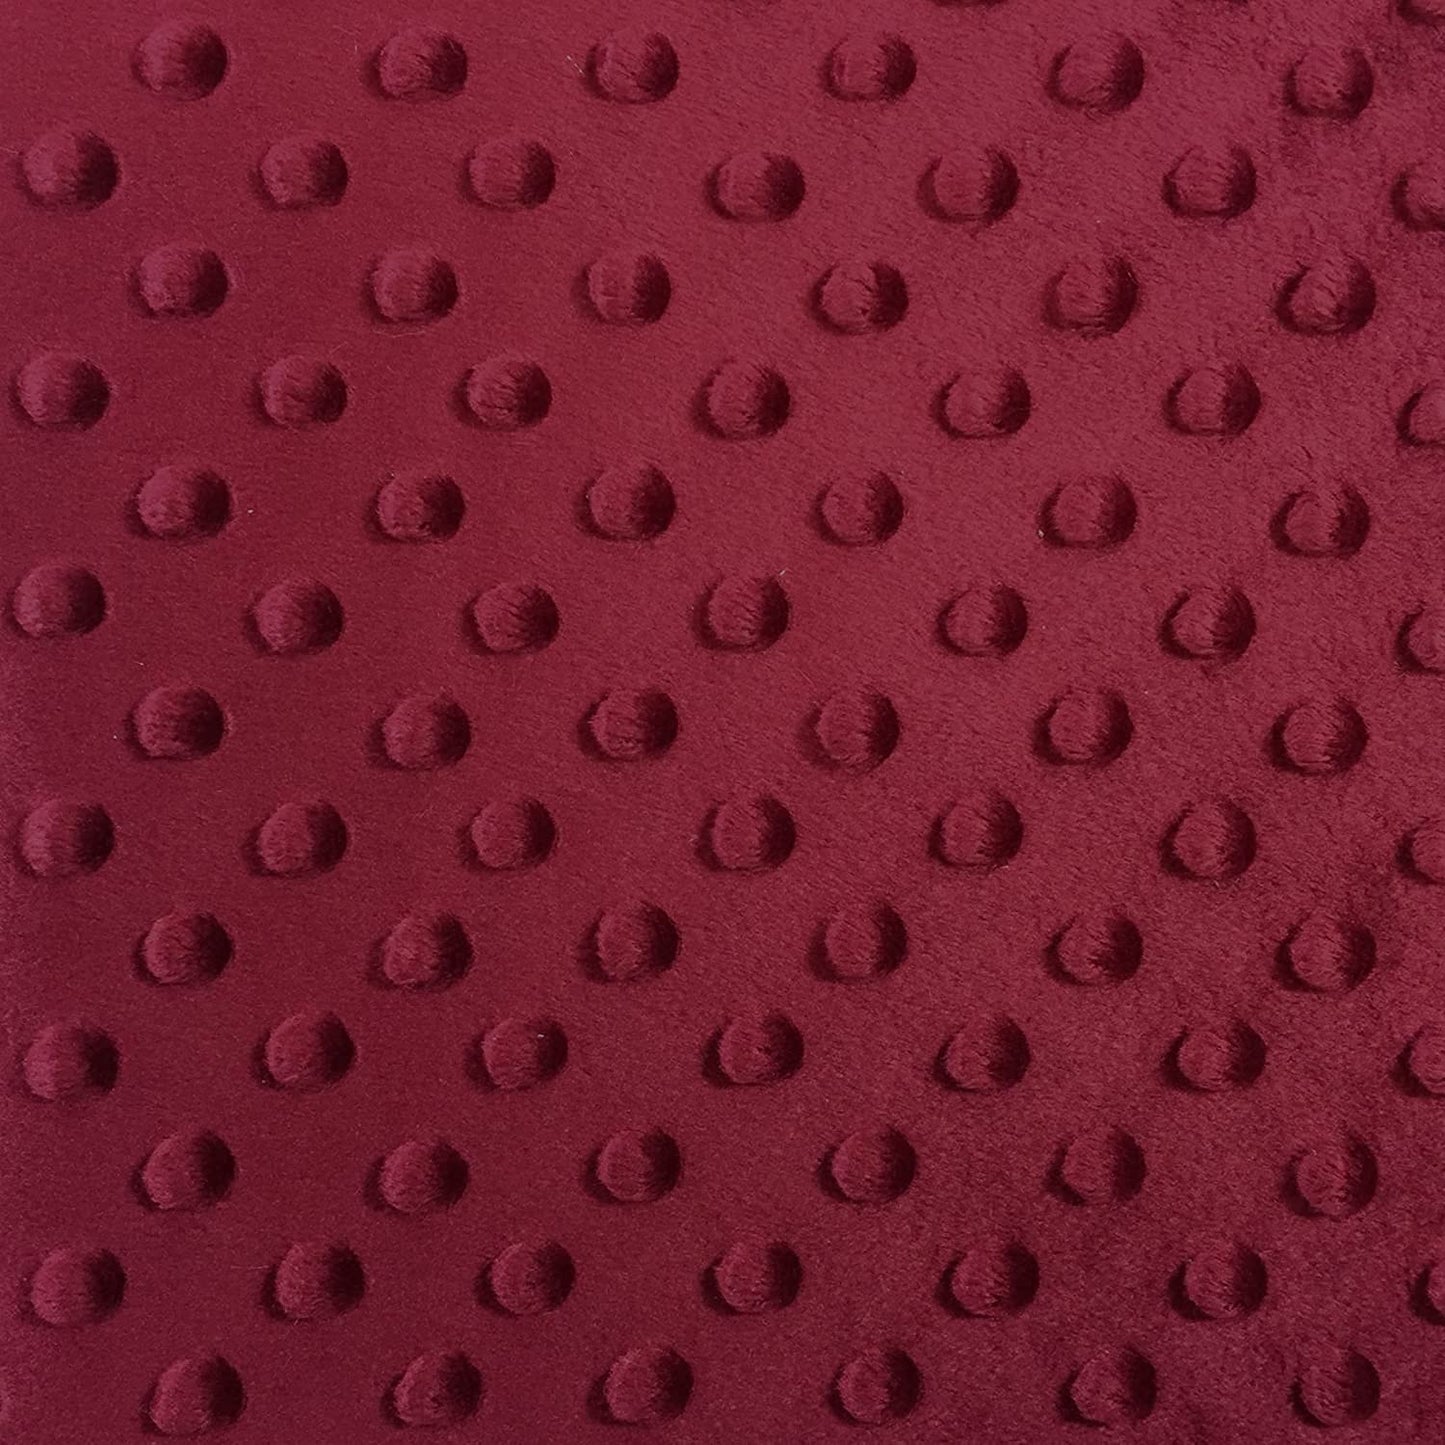 Minky Dimple Dot Soft Cuddle Fabric (Viking Red, 1 Yard)